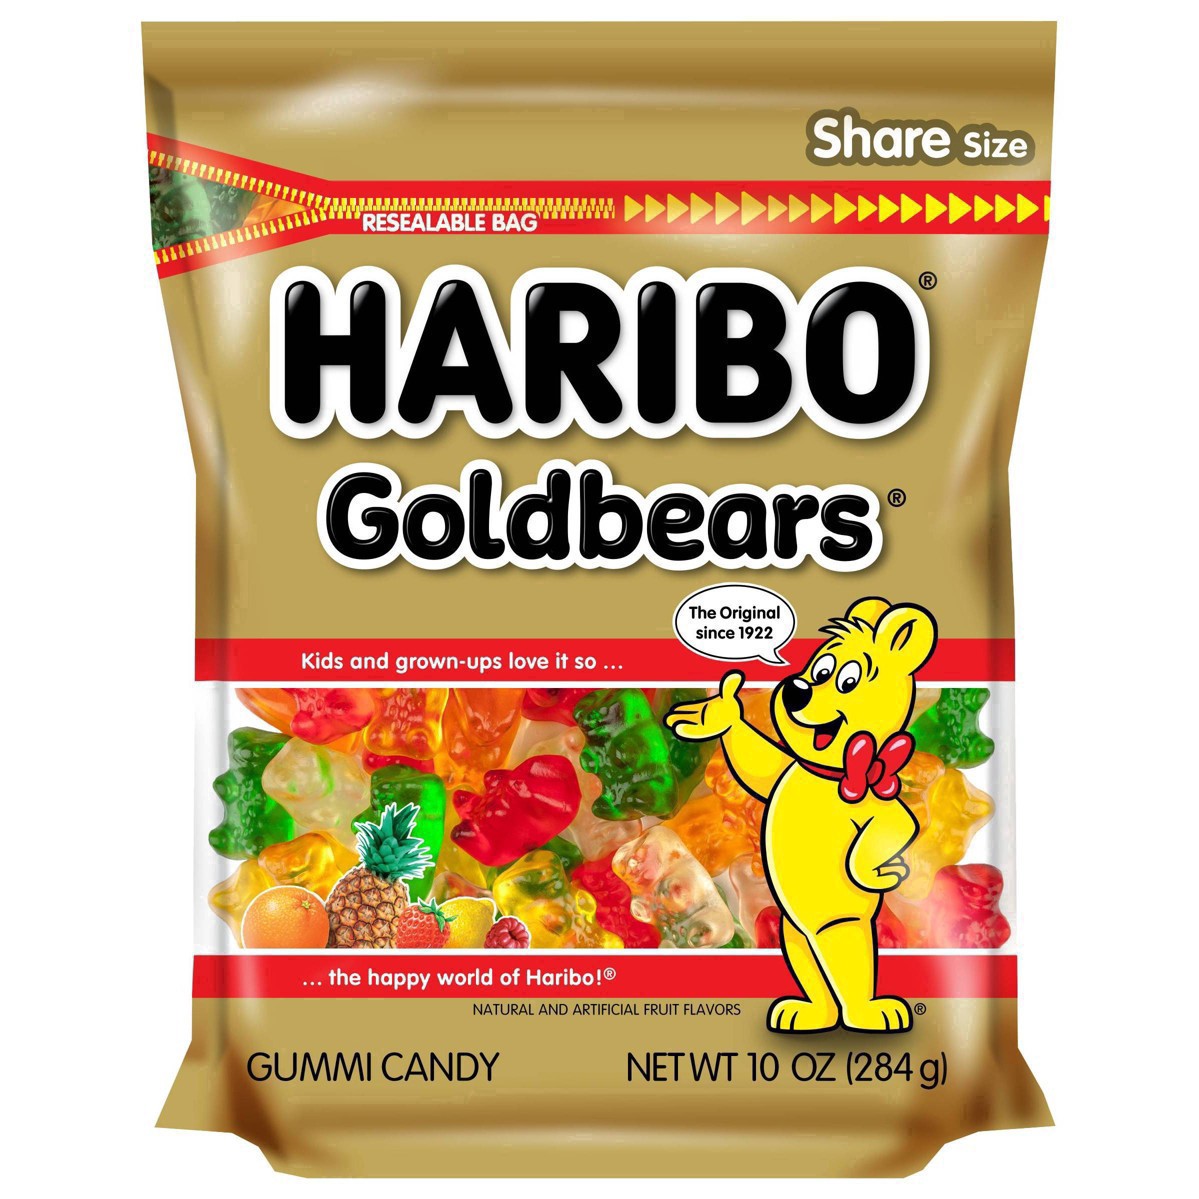 slide 2 of 22, Haribo Share Size Goldbears Gummi Candy 10 oz, 10 oz